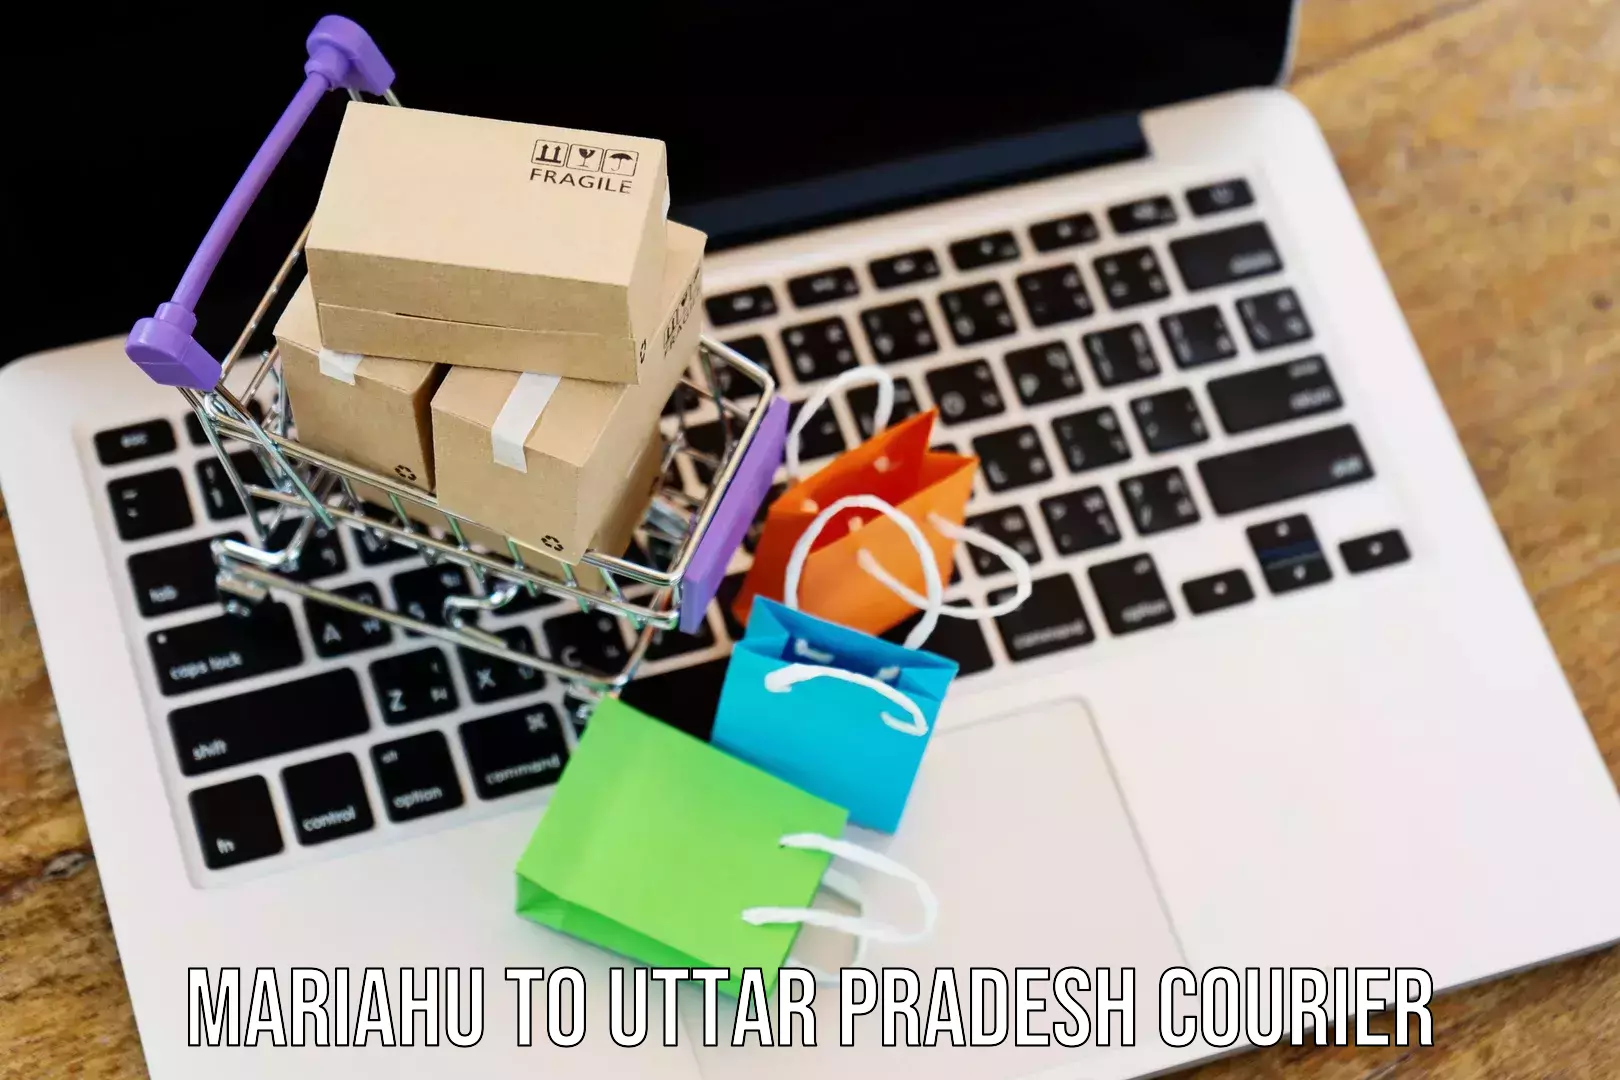 Bulk courier orders Mariahu to Uttar Pradesh